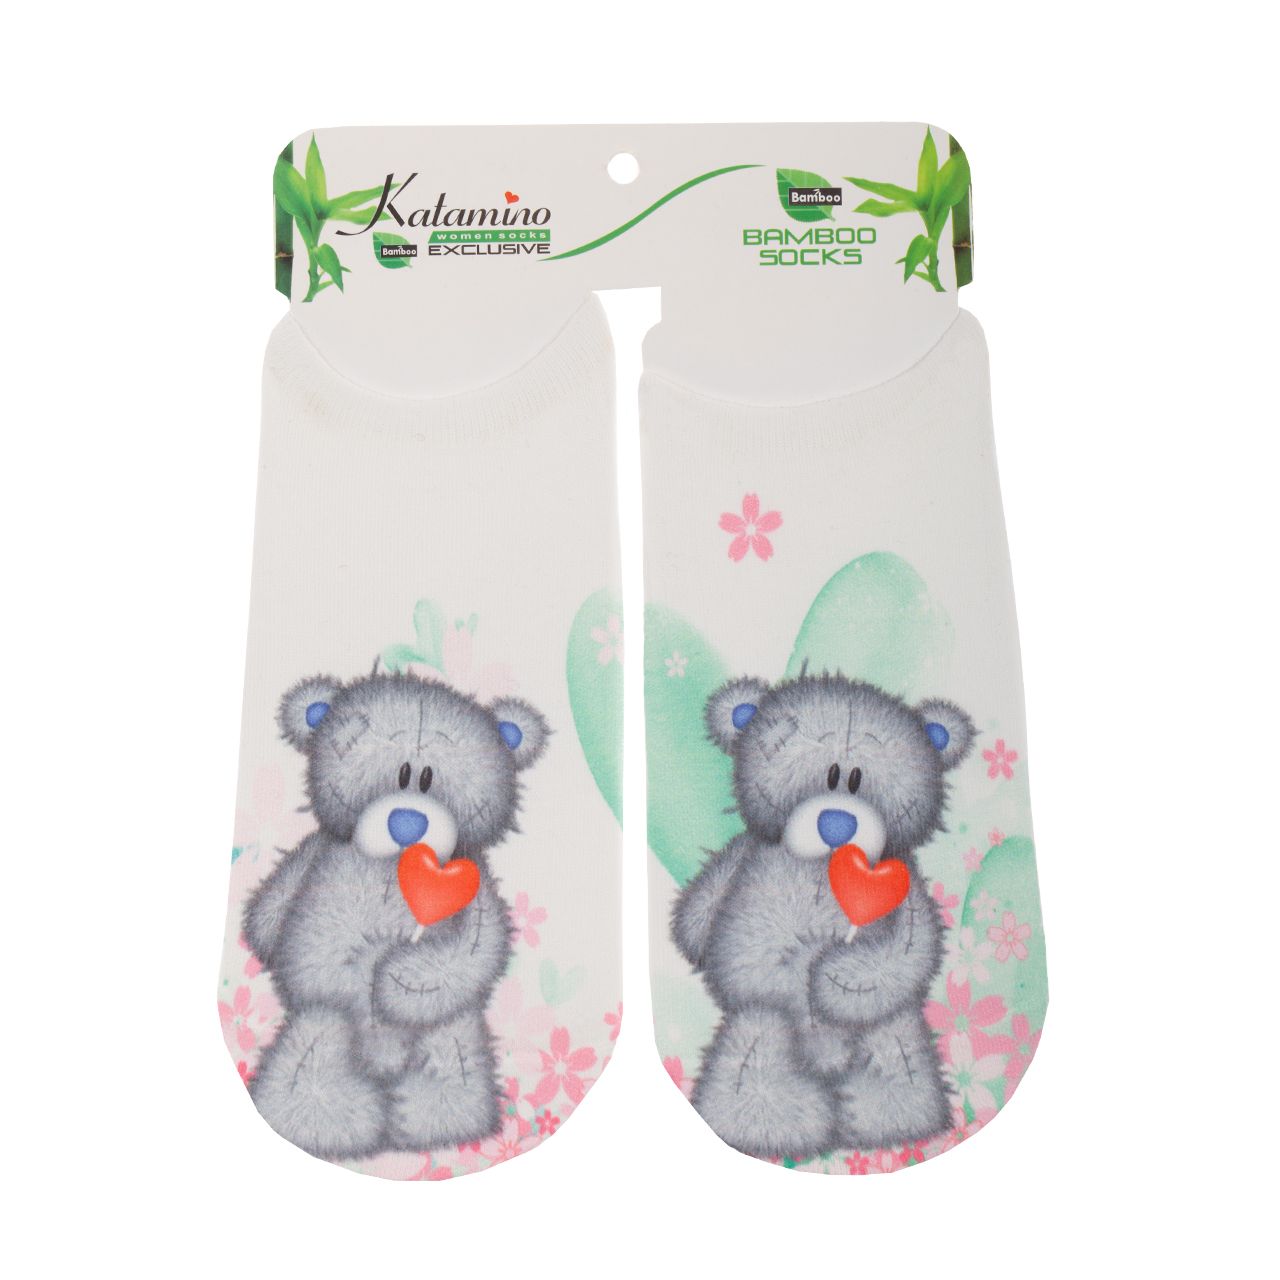 جوراب دخترانه کاتامینو طرح خرس زخمی  -  - 2